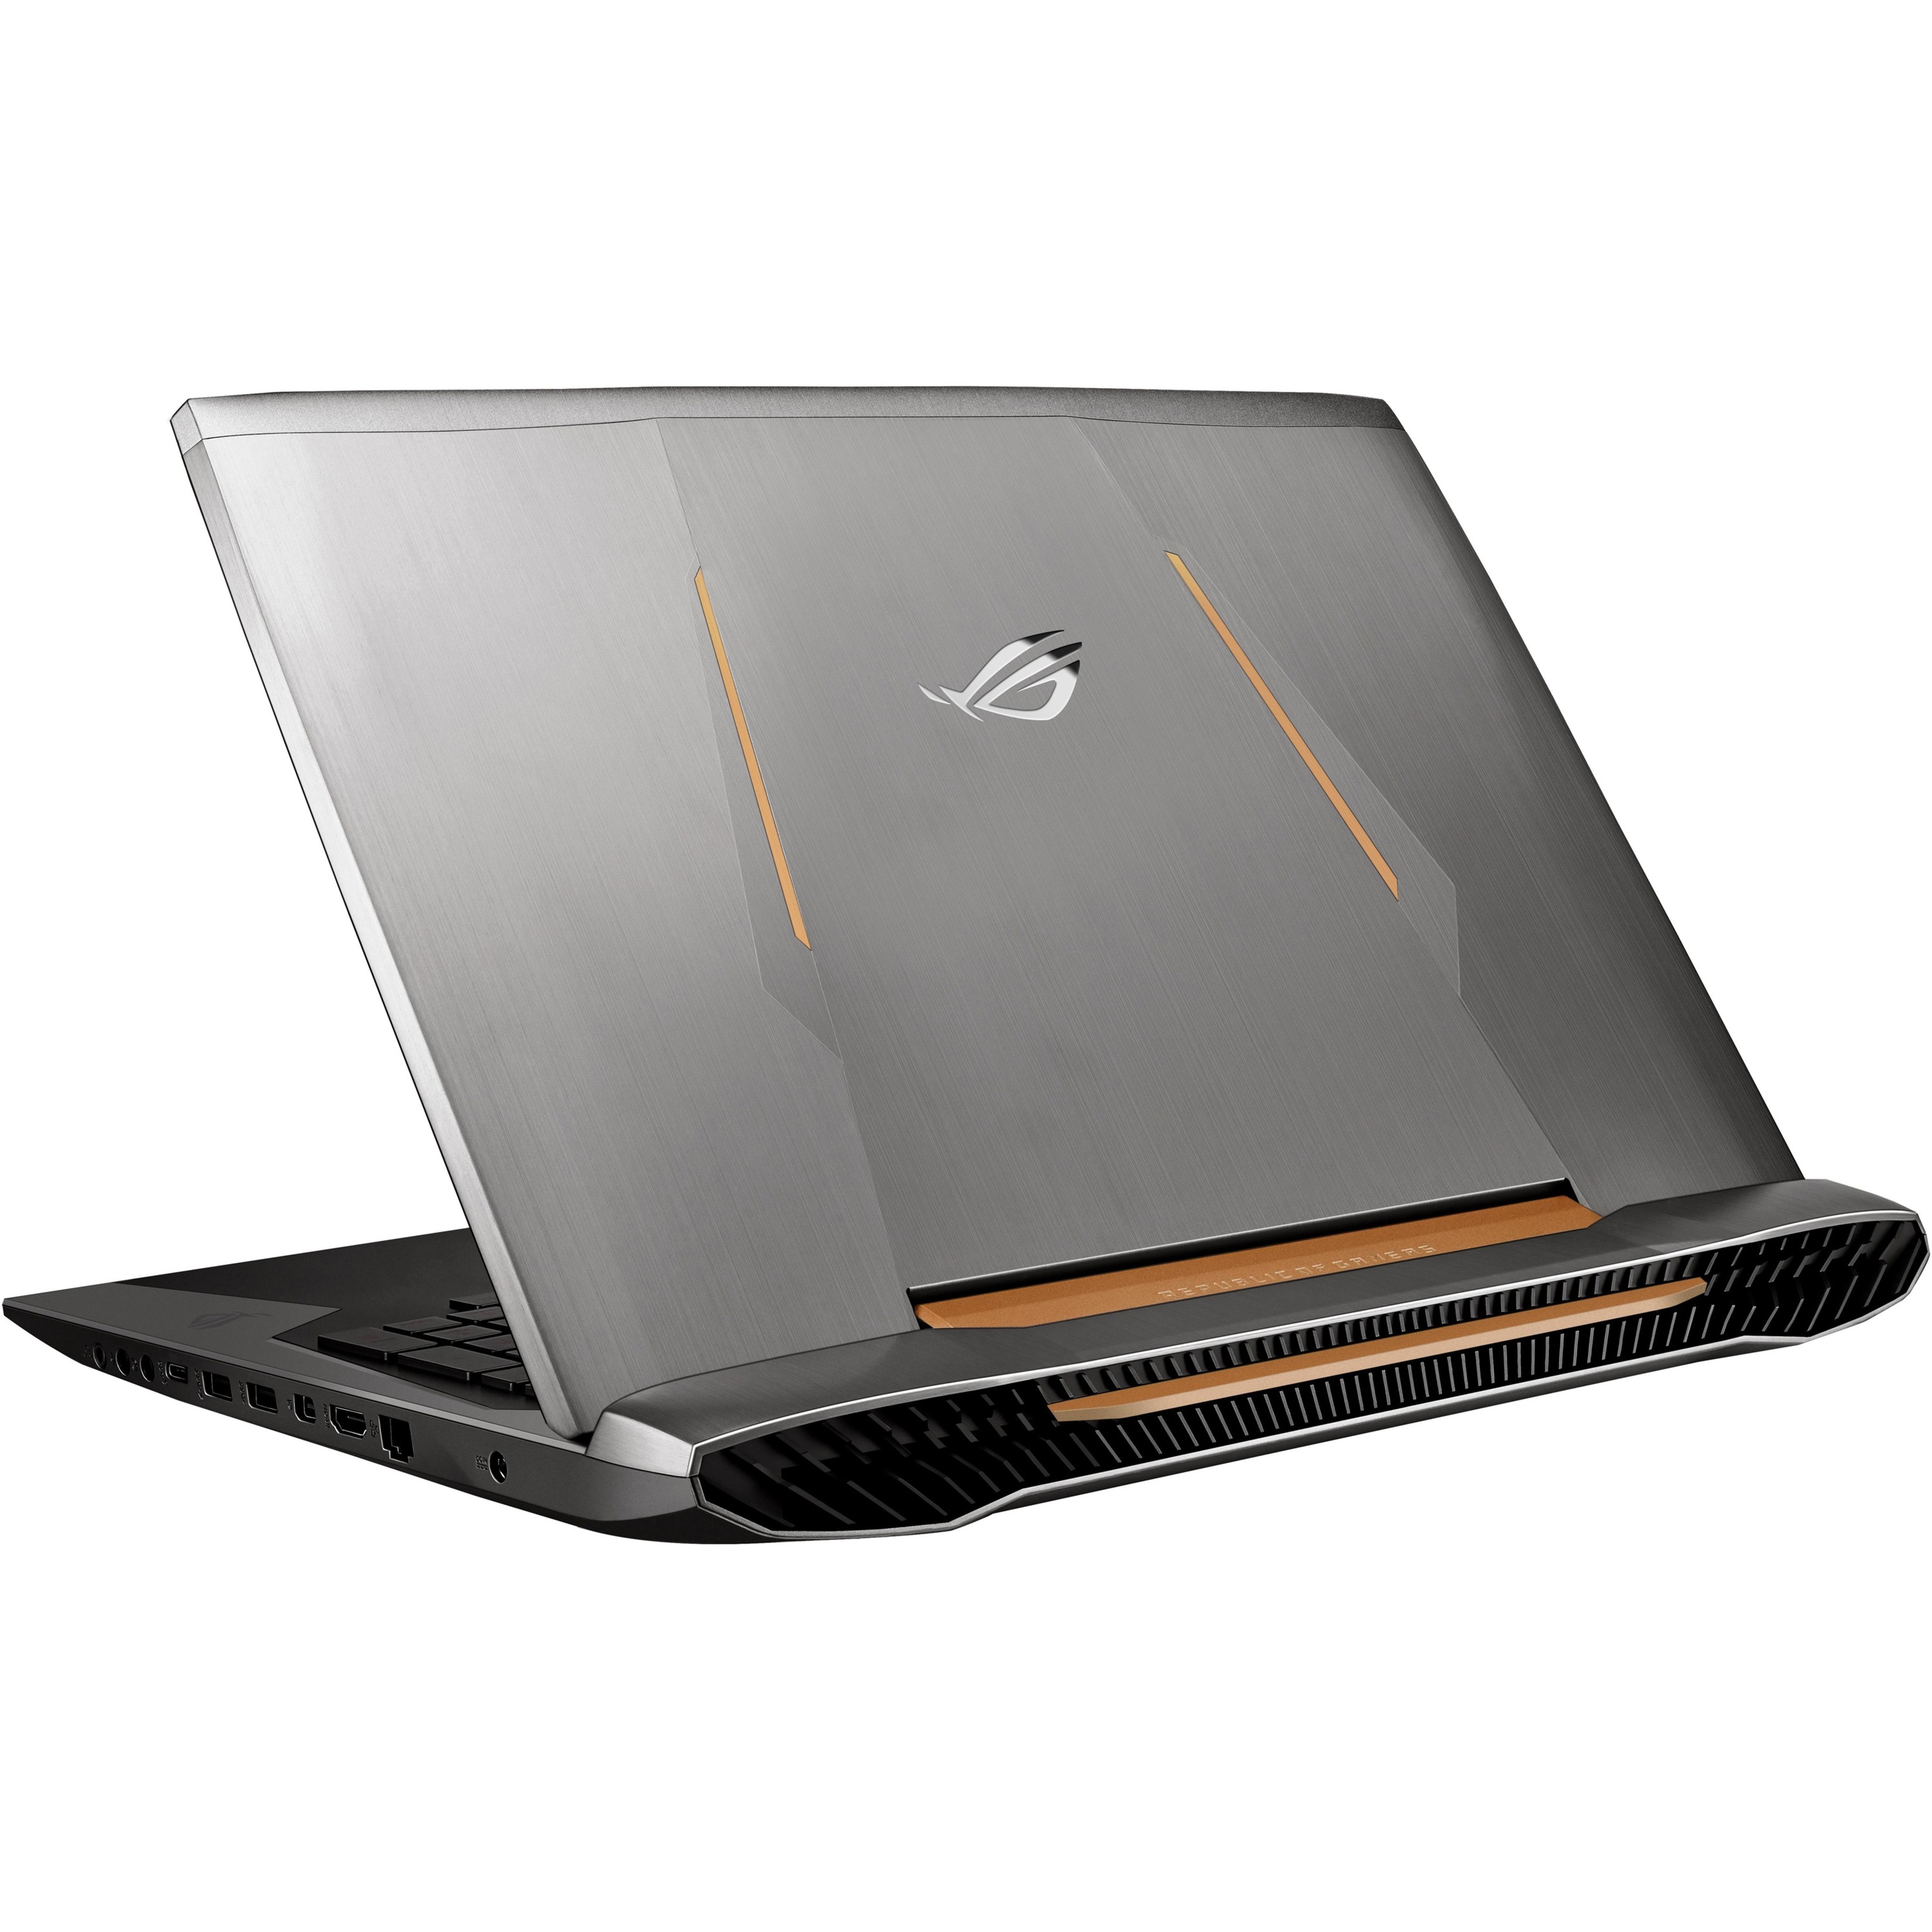 ASUS ROG G752VT-DH72 17 Inch Gaming Laptop, Nvidia GeForce GTX 970M 3 GB VRAM, 16 GB DDR4, 1 TB, 128 GB NVMe SSD - image 5 of 6